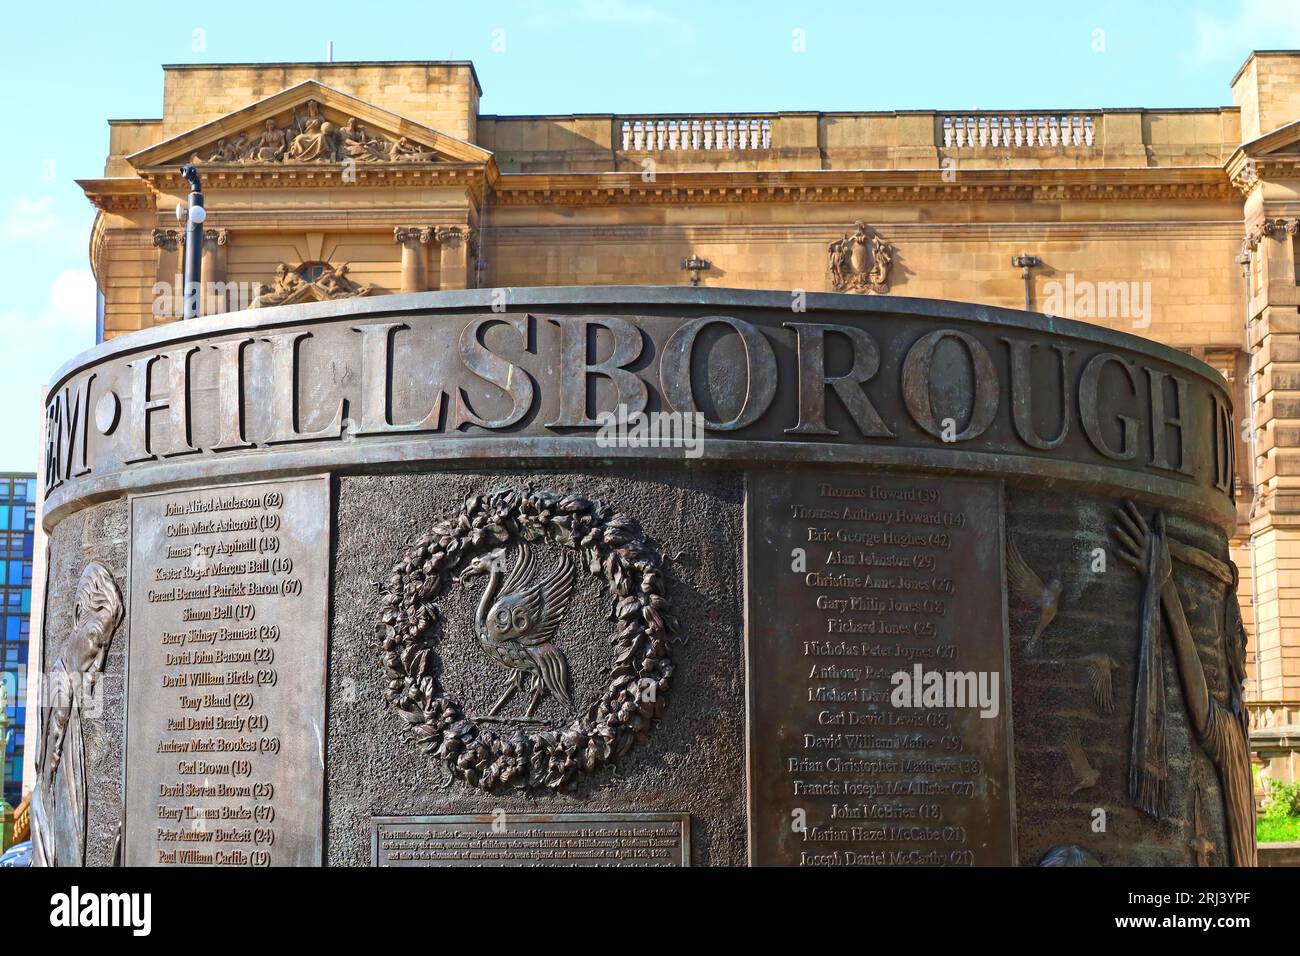 Hillsborough Memorial Monument, vers le 96, Tom Murphy, St John's Gardens, Old Haymarket, Liverpool , Merseyside, Angleterre, Royaume-Uni, L1 6ER Banque D'Images